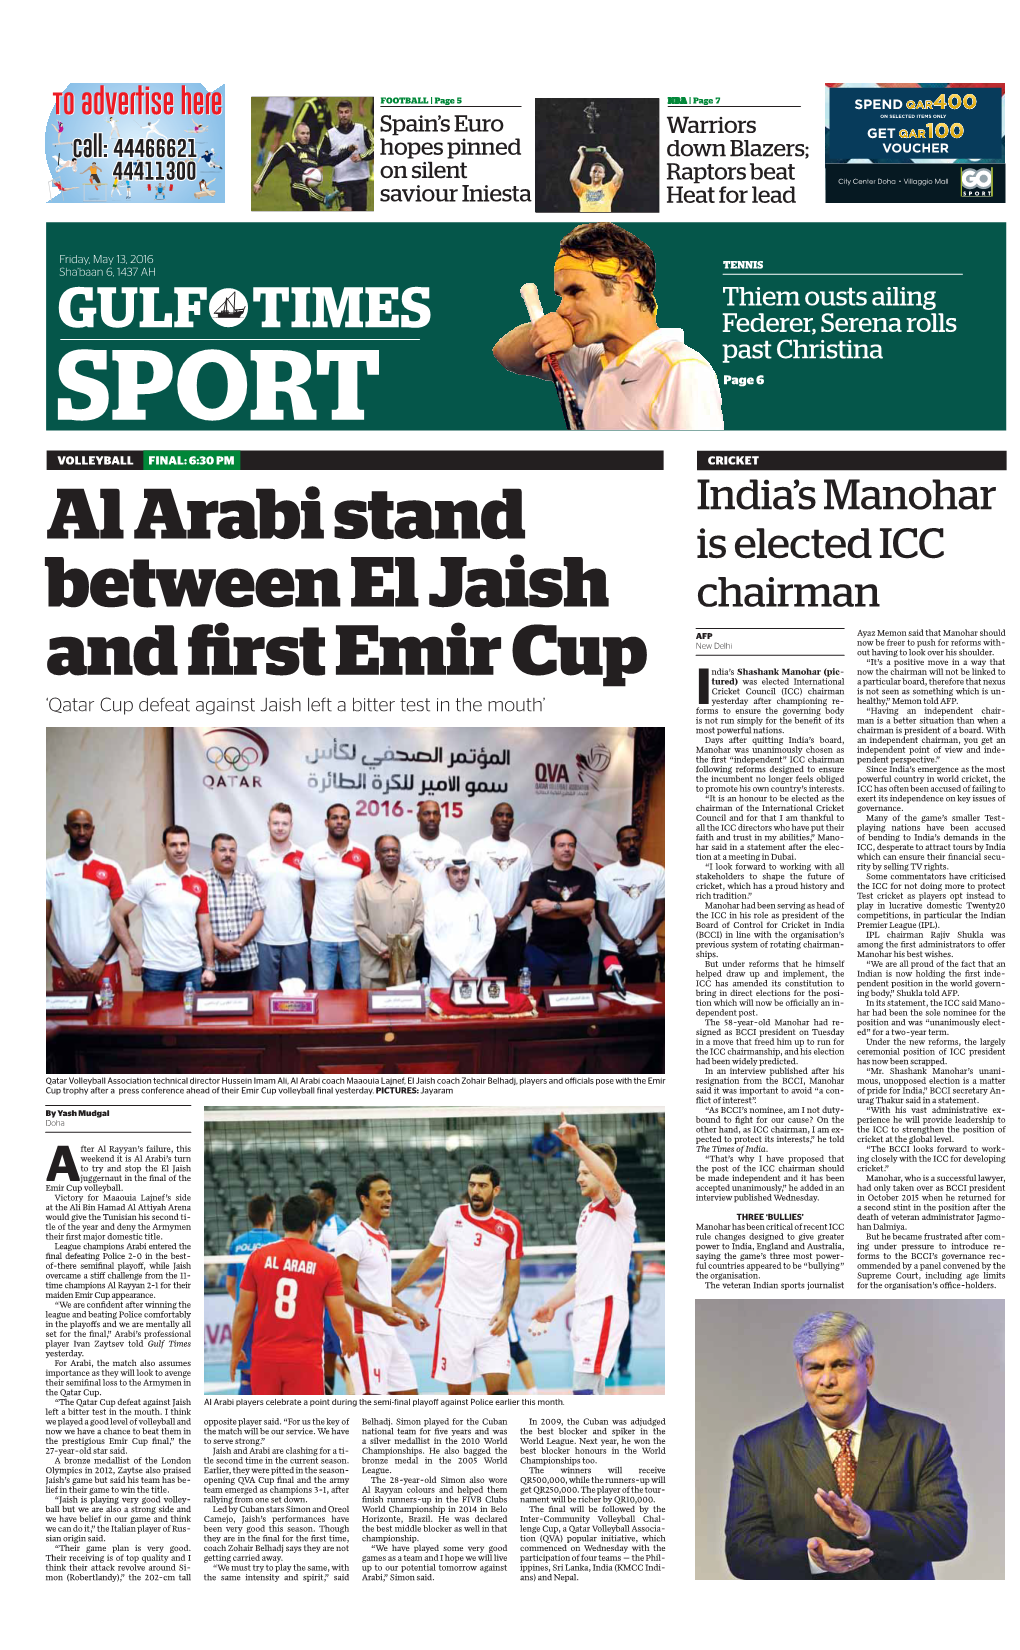 Al Arabi Stand Between El Jaish and First Emir